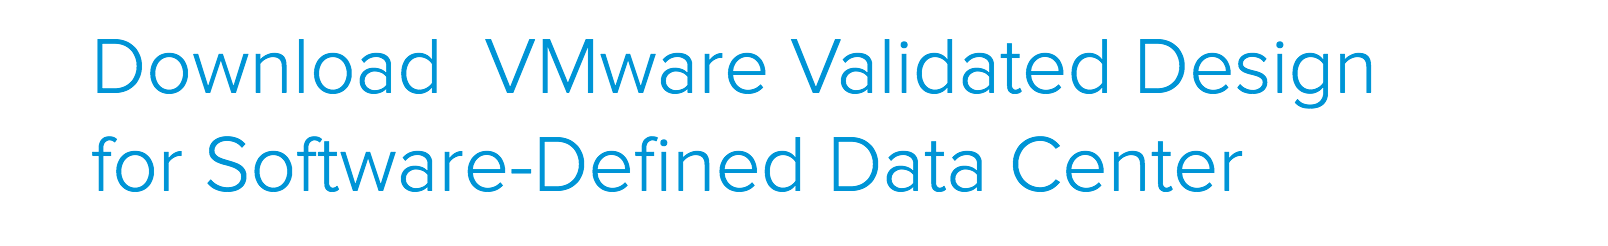 VMware Validated Design for Software-Defined Data Center 3.0